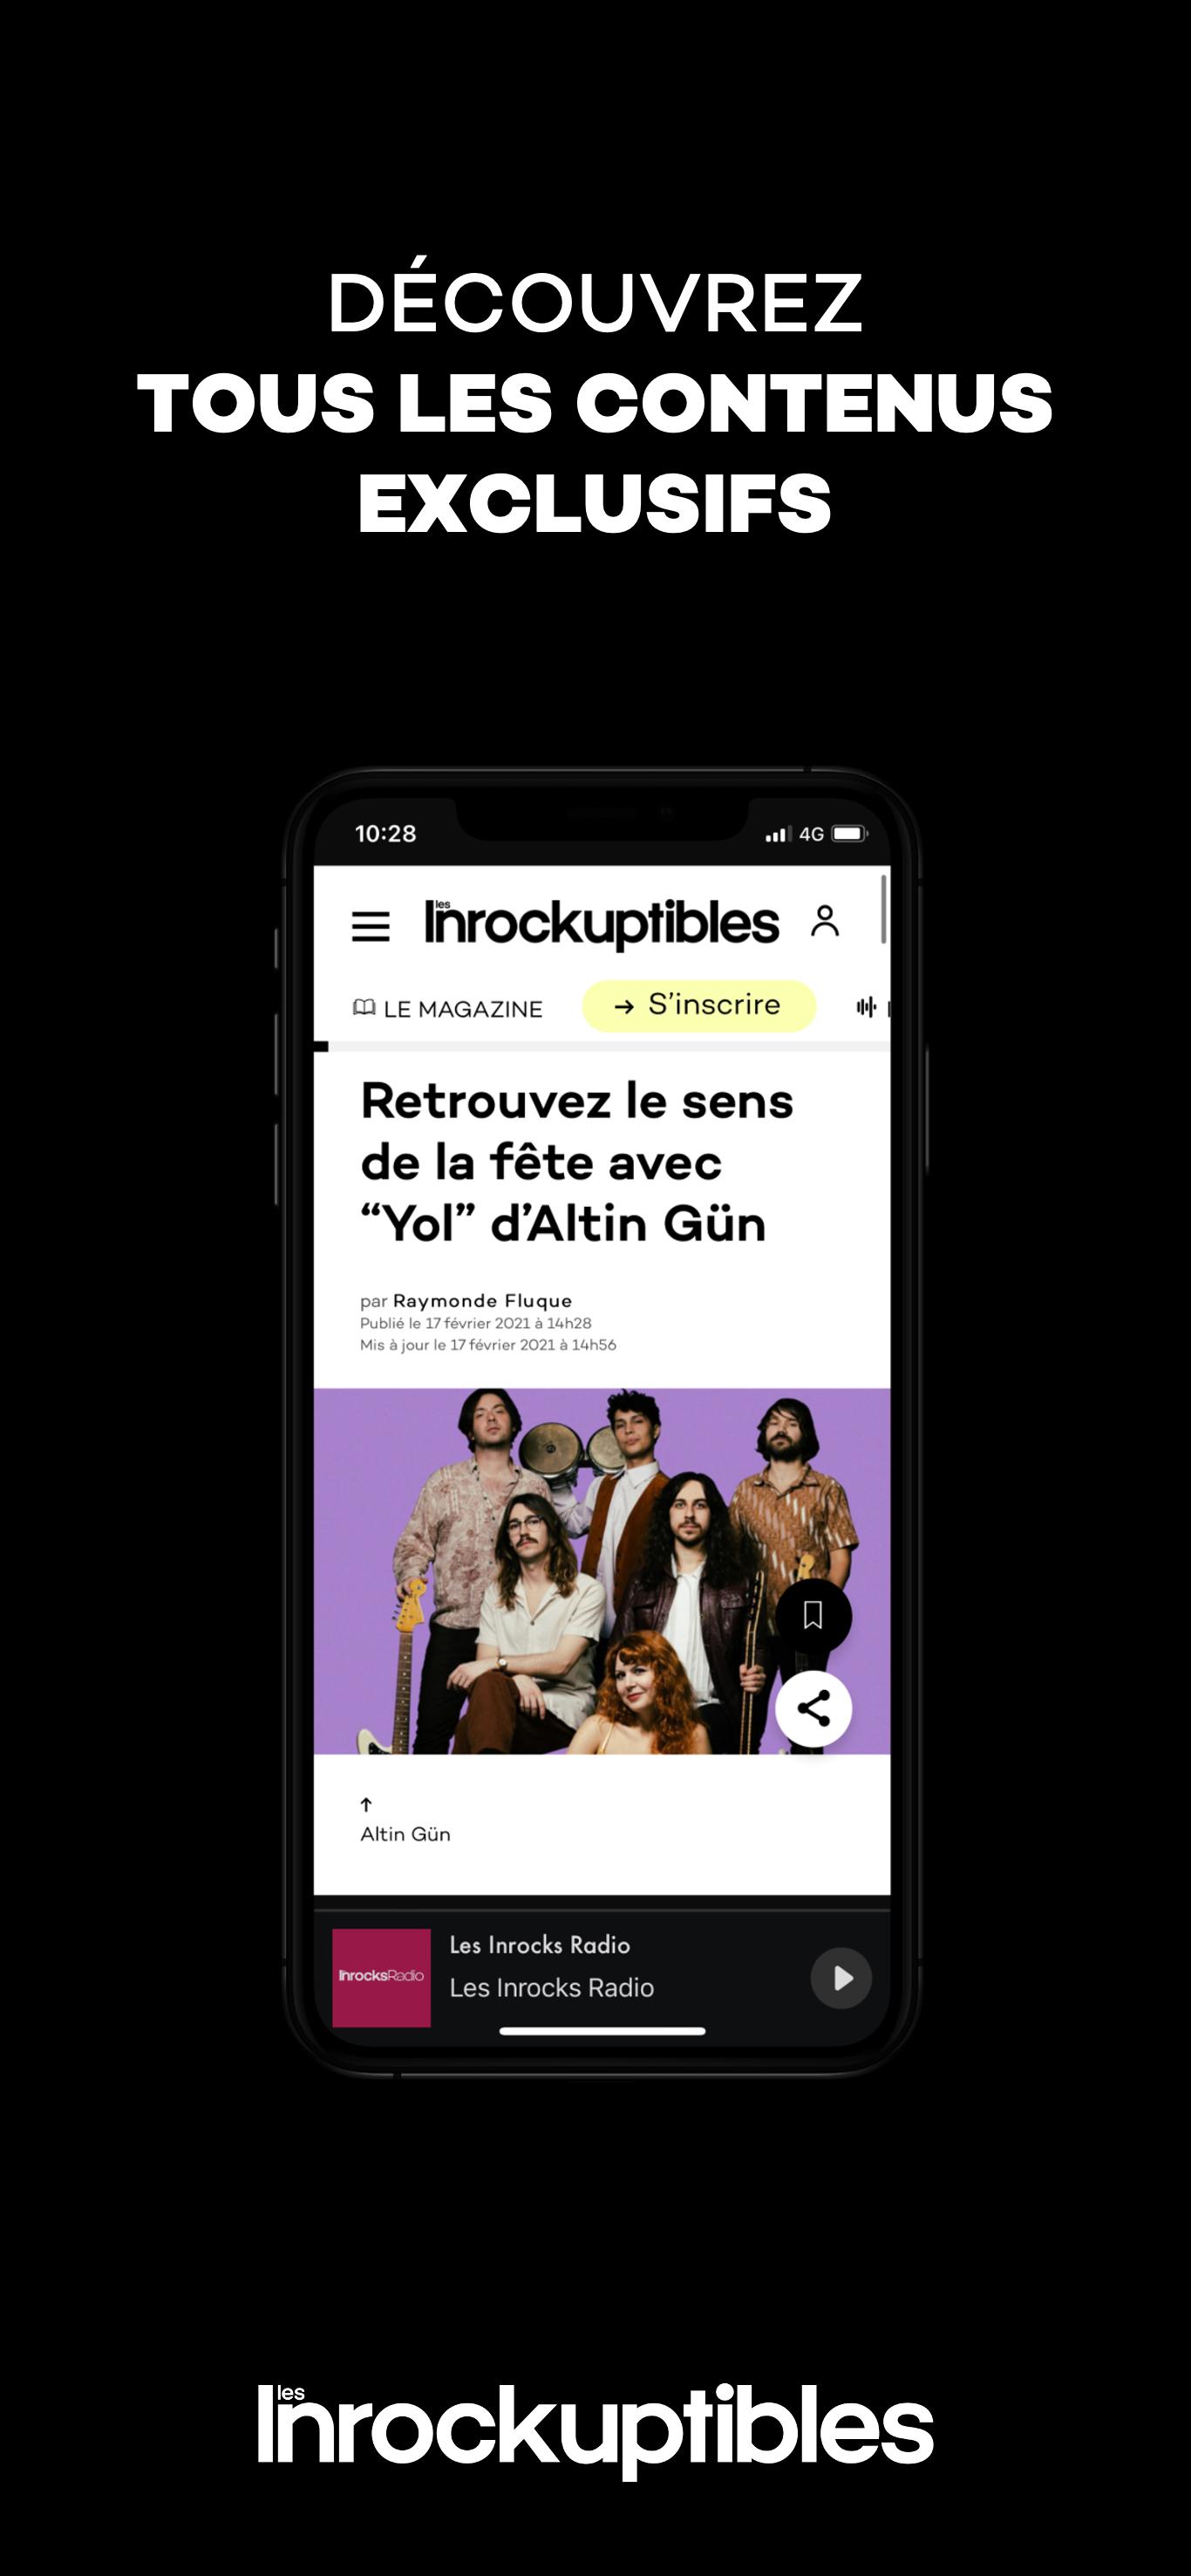 Les Inrockuptibles - playlists, articles et vidéos 6.4.3 Screenshot 8